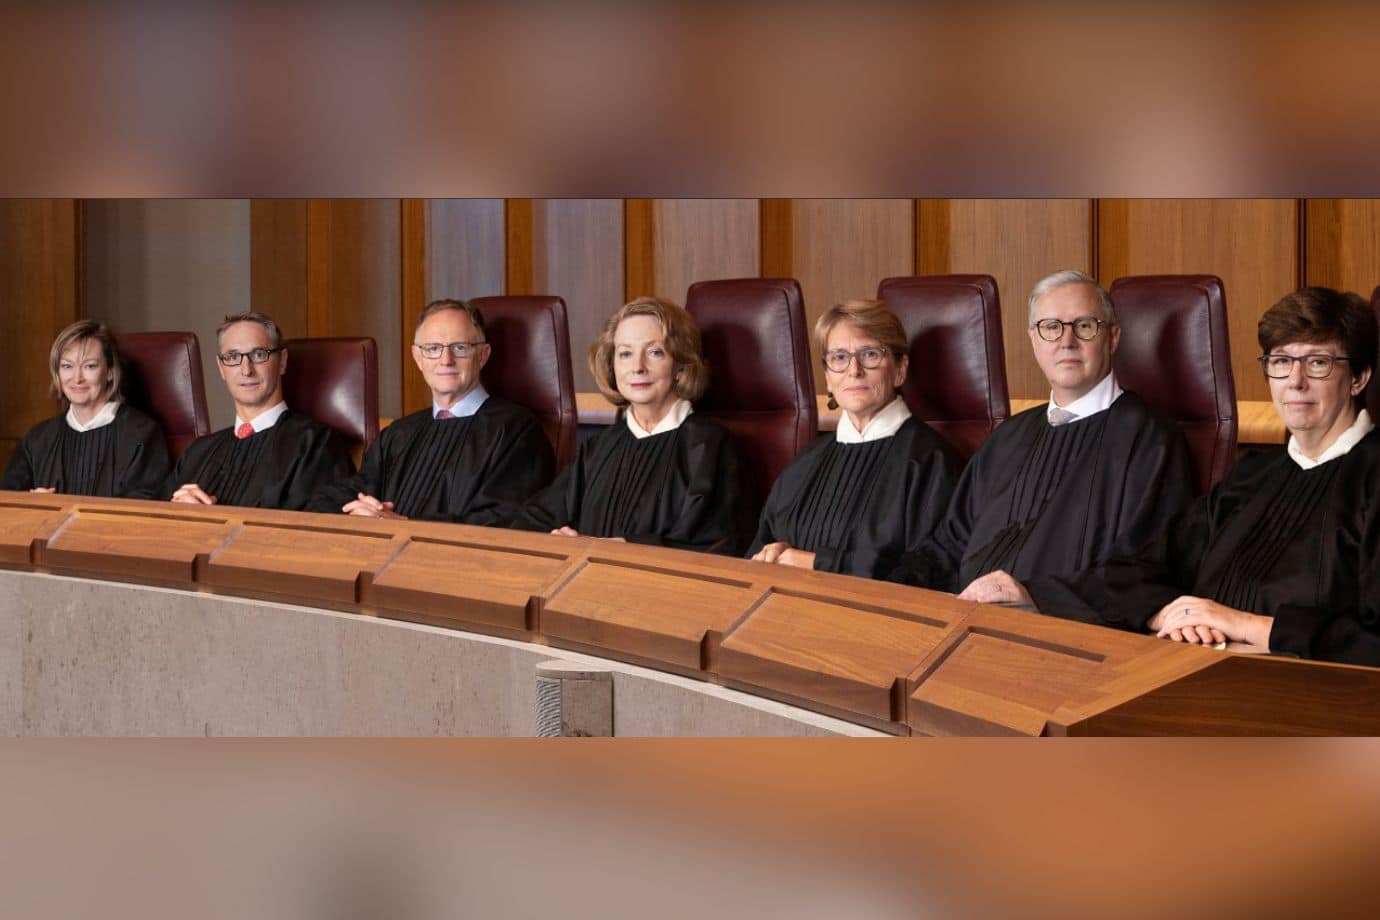 The end of Australia's majority-female High Court bench